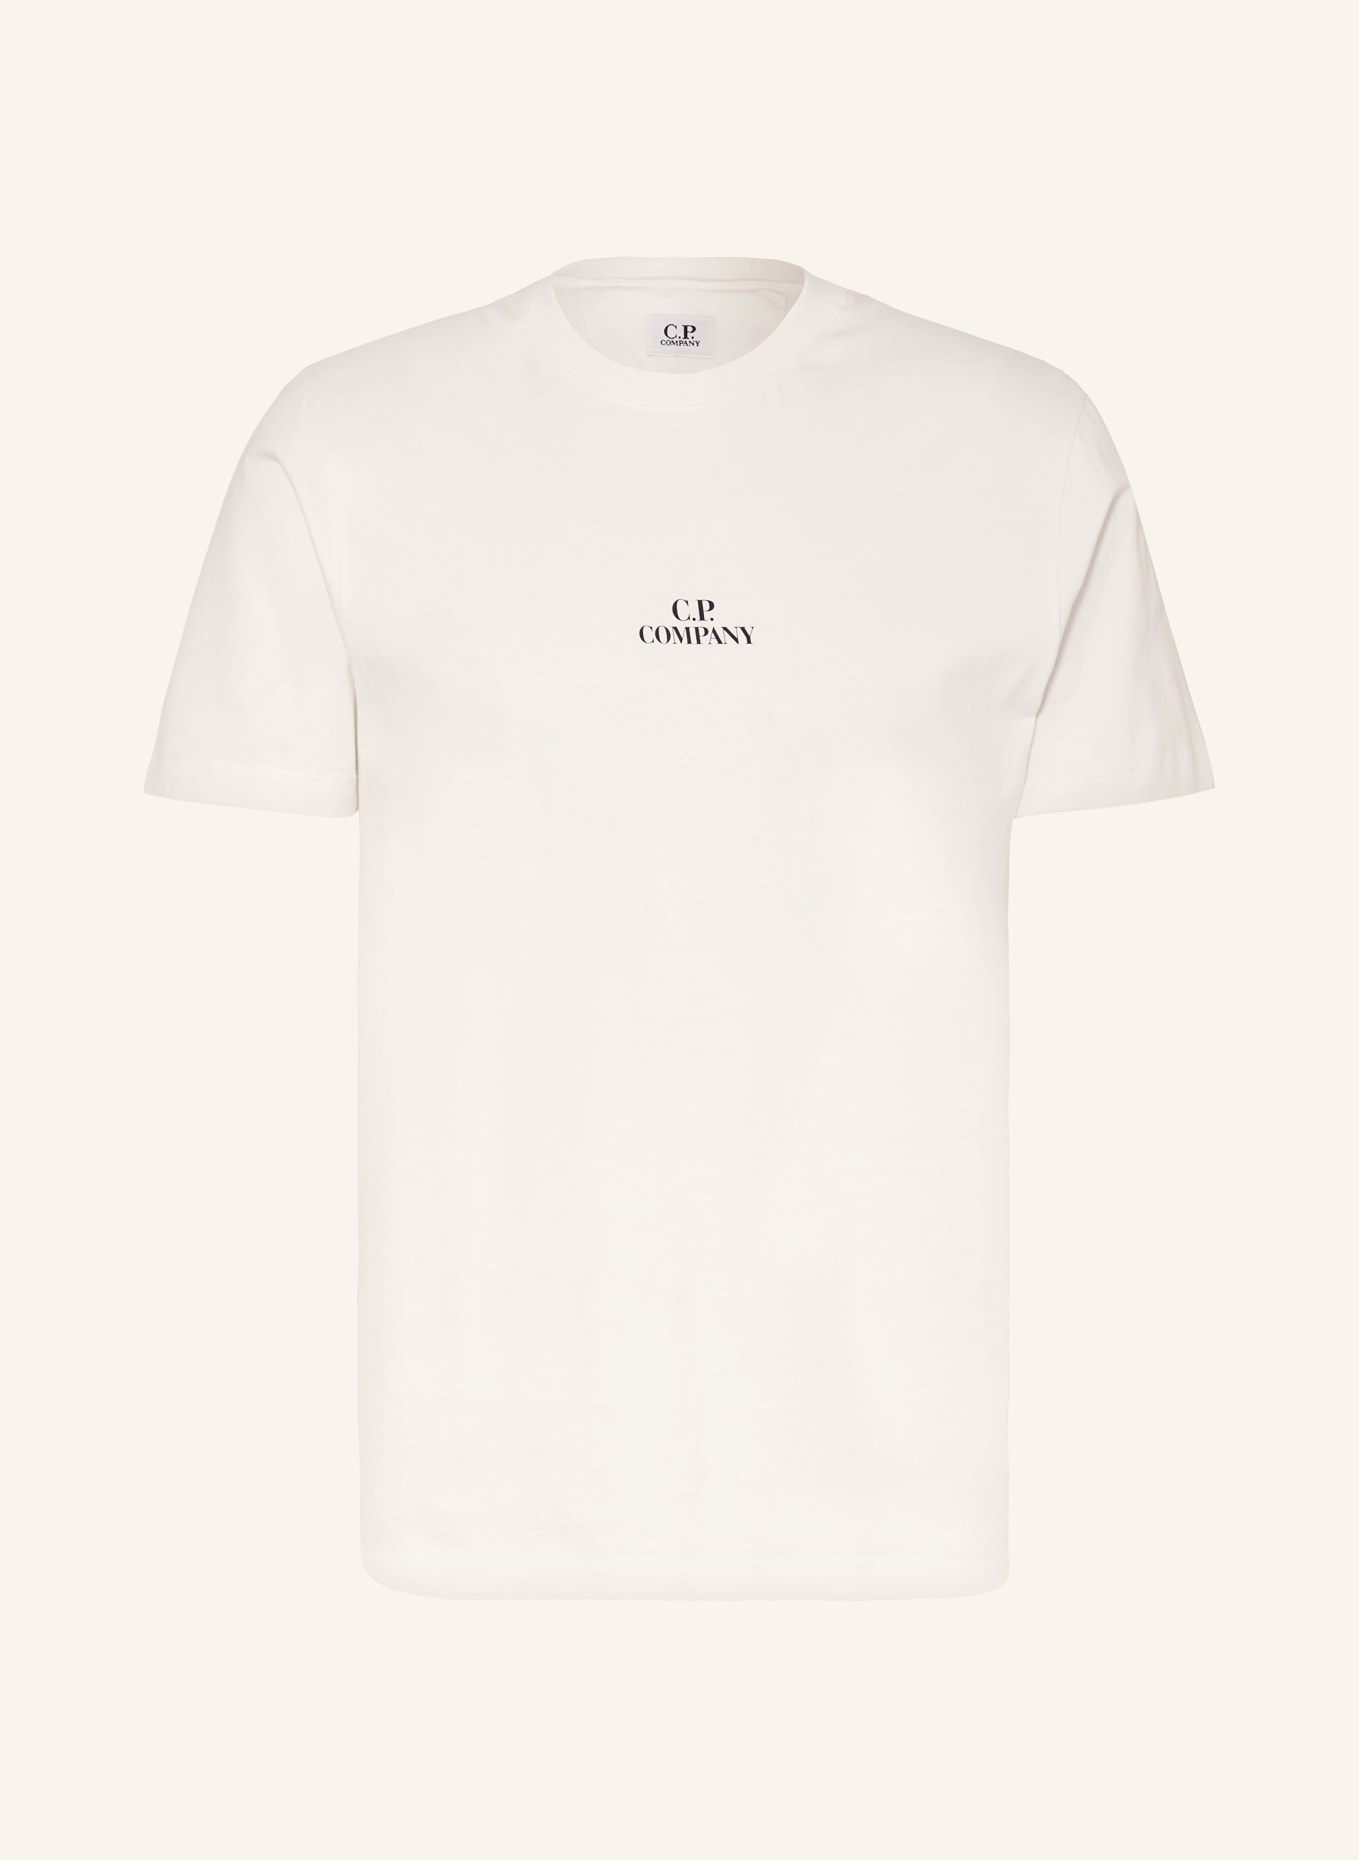 C.P. COMPANY T-Shirt, Farbe: WEISS/ DUNKELGRAU/ HELLGRAU (Bild 1)